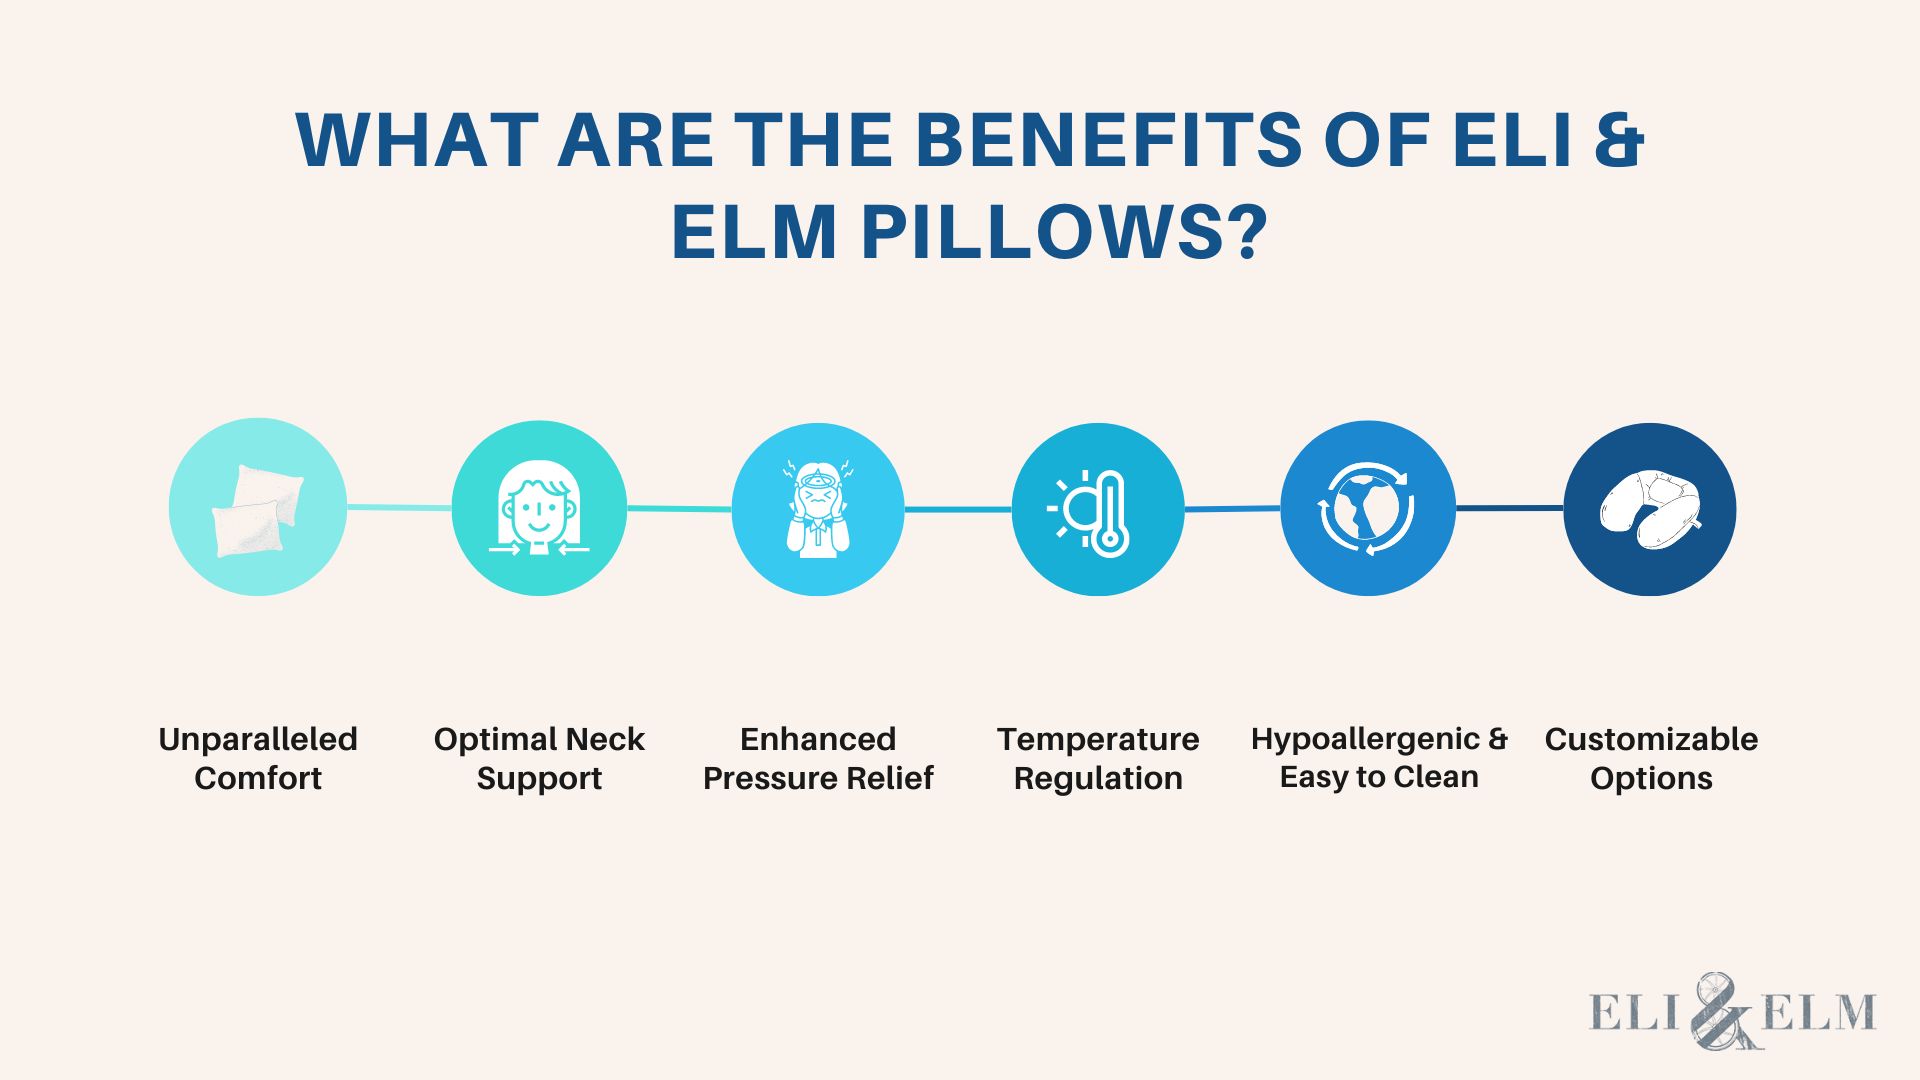 Benefits of Eli & Elm Pillows